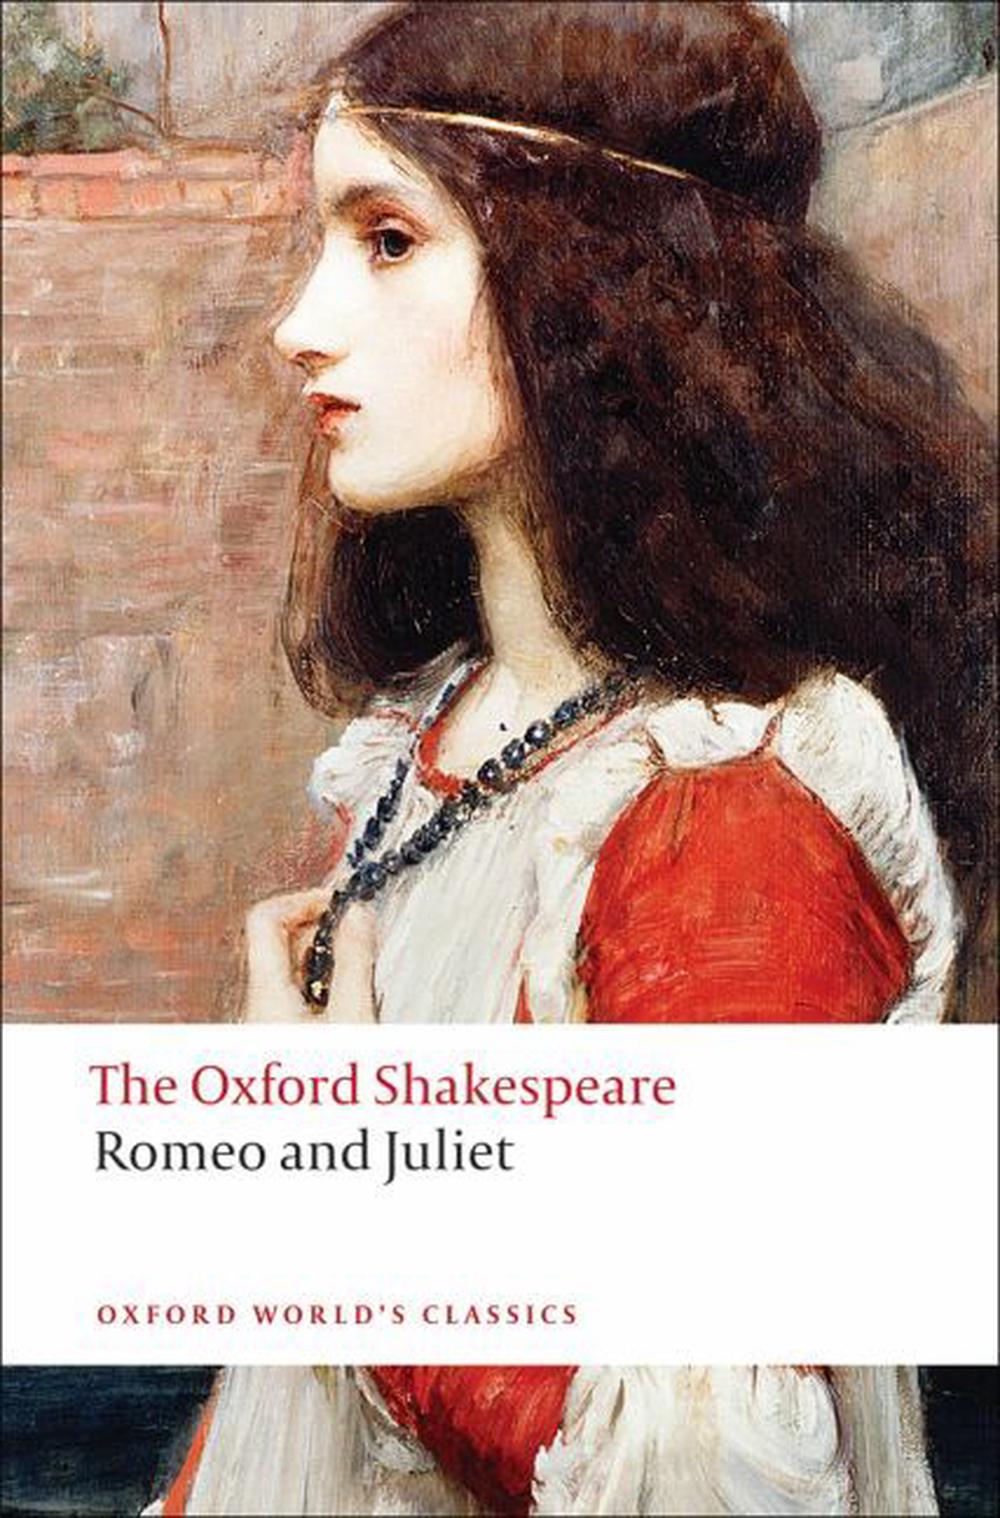 romeo ve juliet william shakespeare